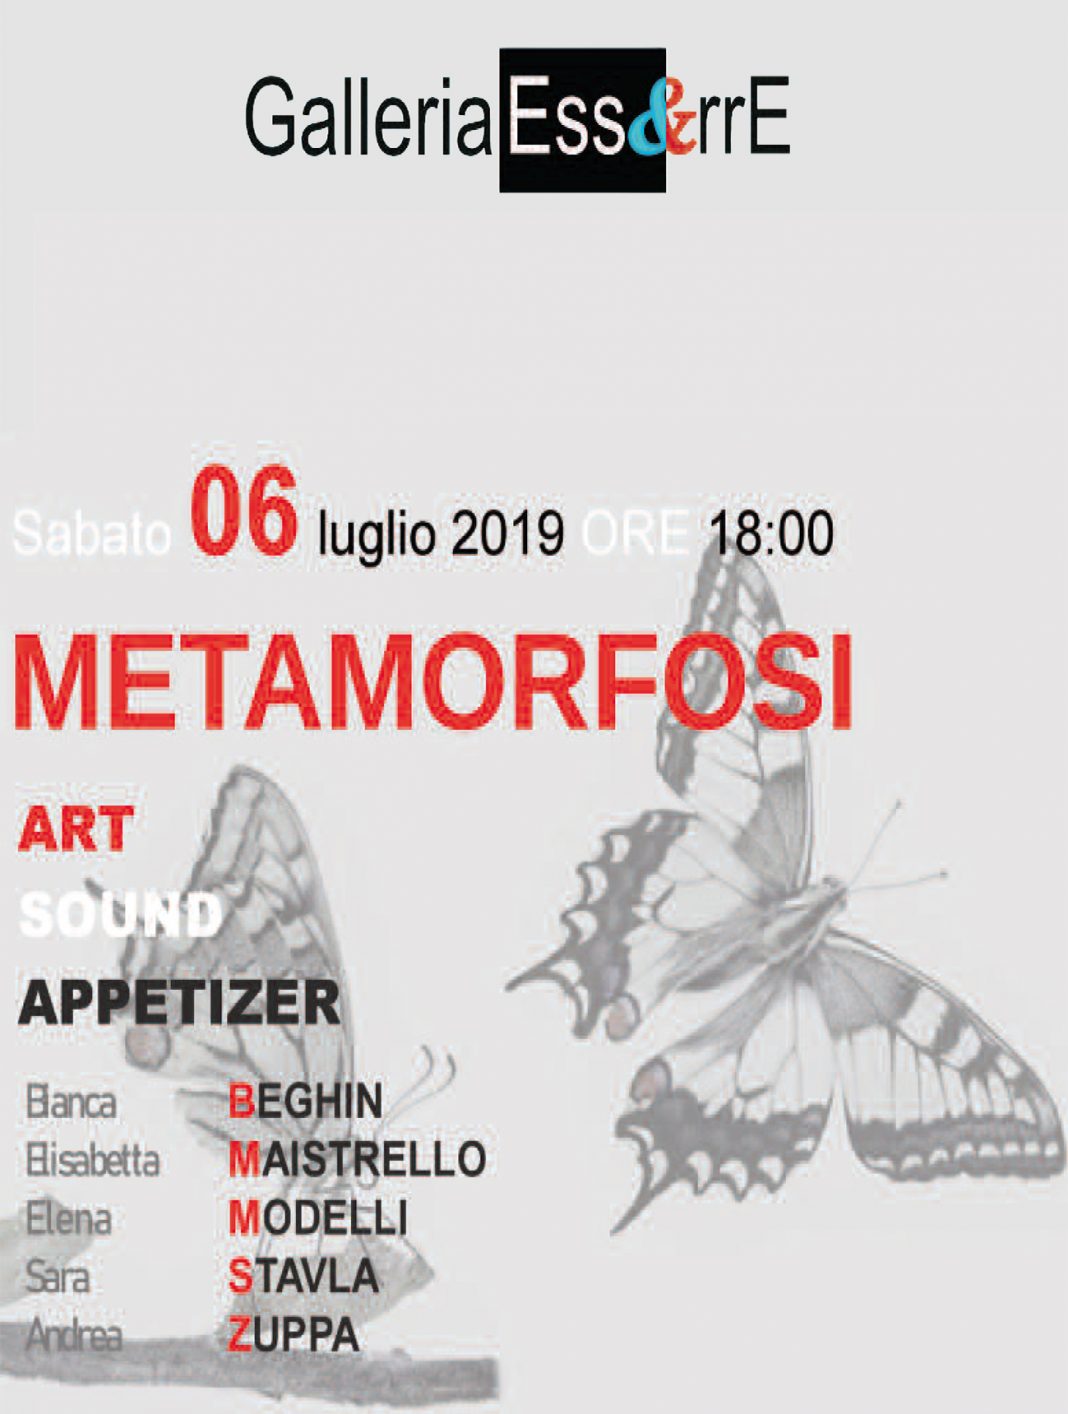 Metamorfosihttps://www.exibart.com/repository/media/eventi/2019/07/metamorfosi-1068x1414.jpg